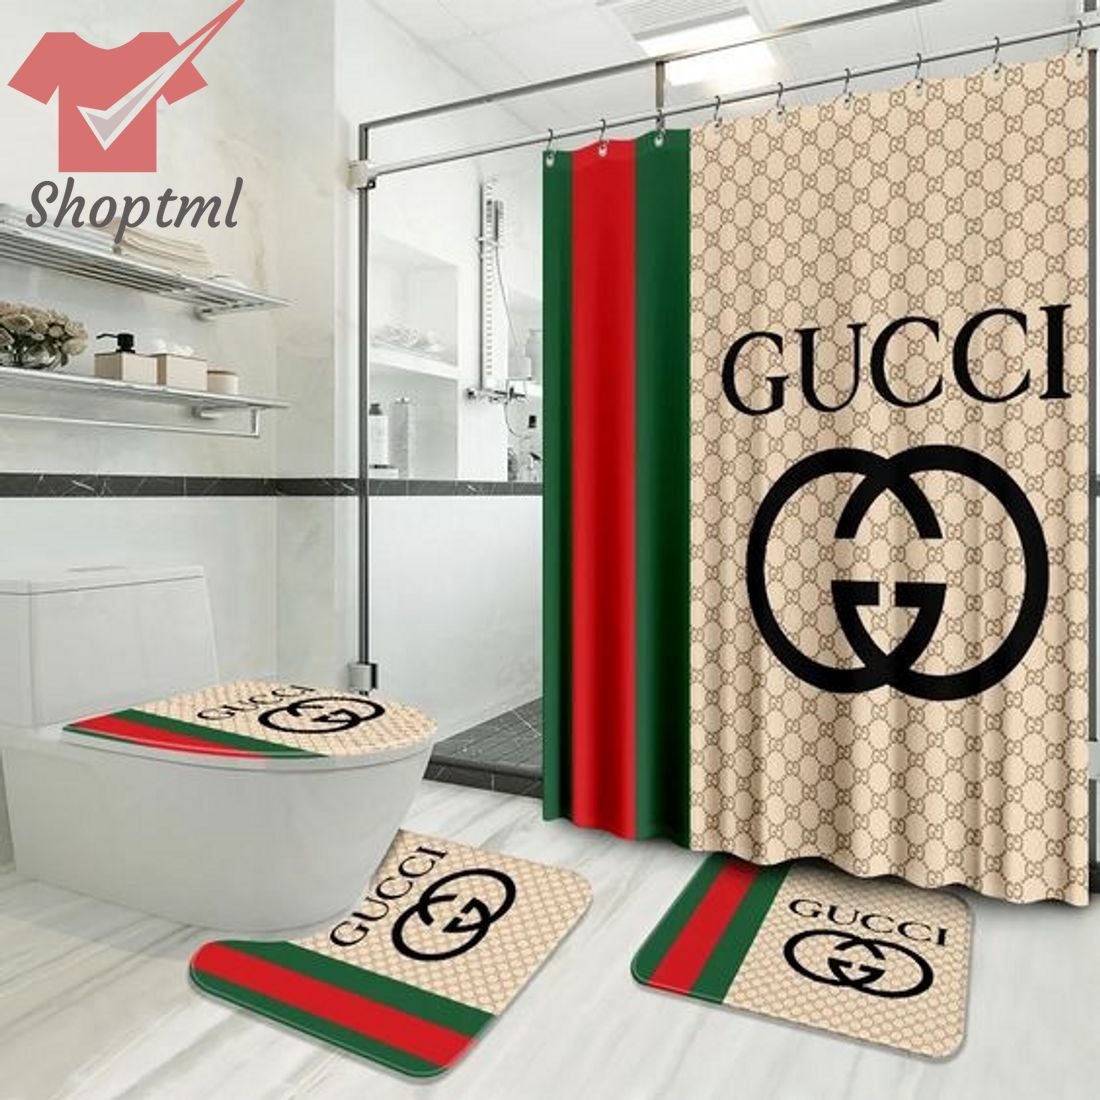 Gucci Bathroom Set Luxury Shower Curtain Luxury Brand